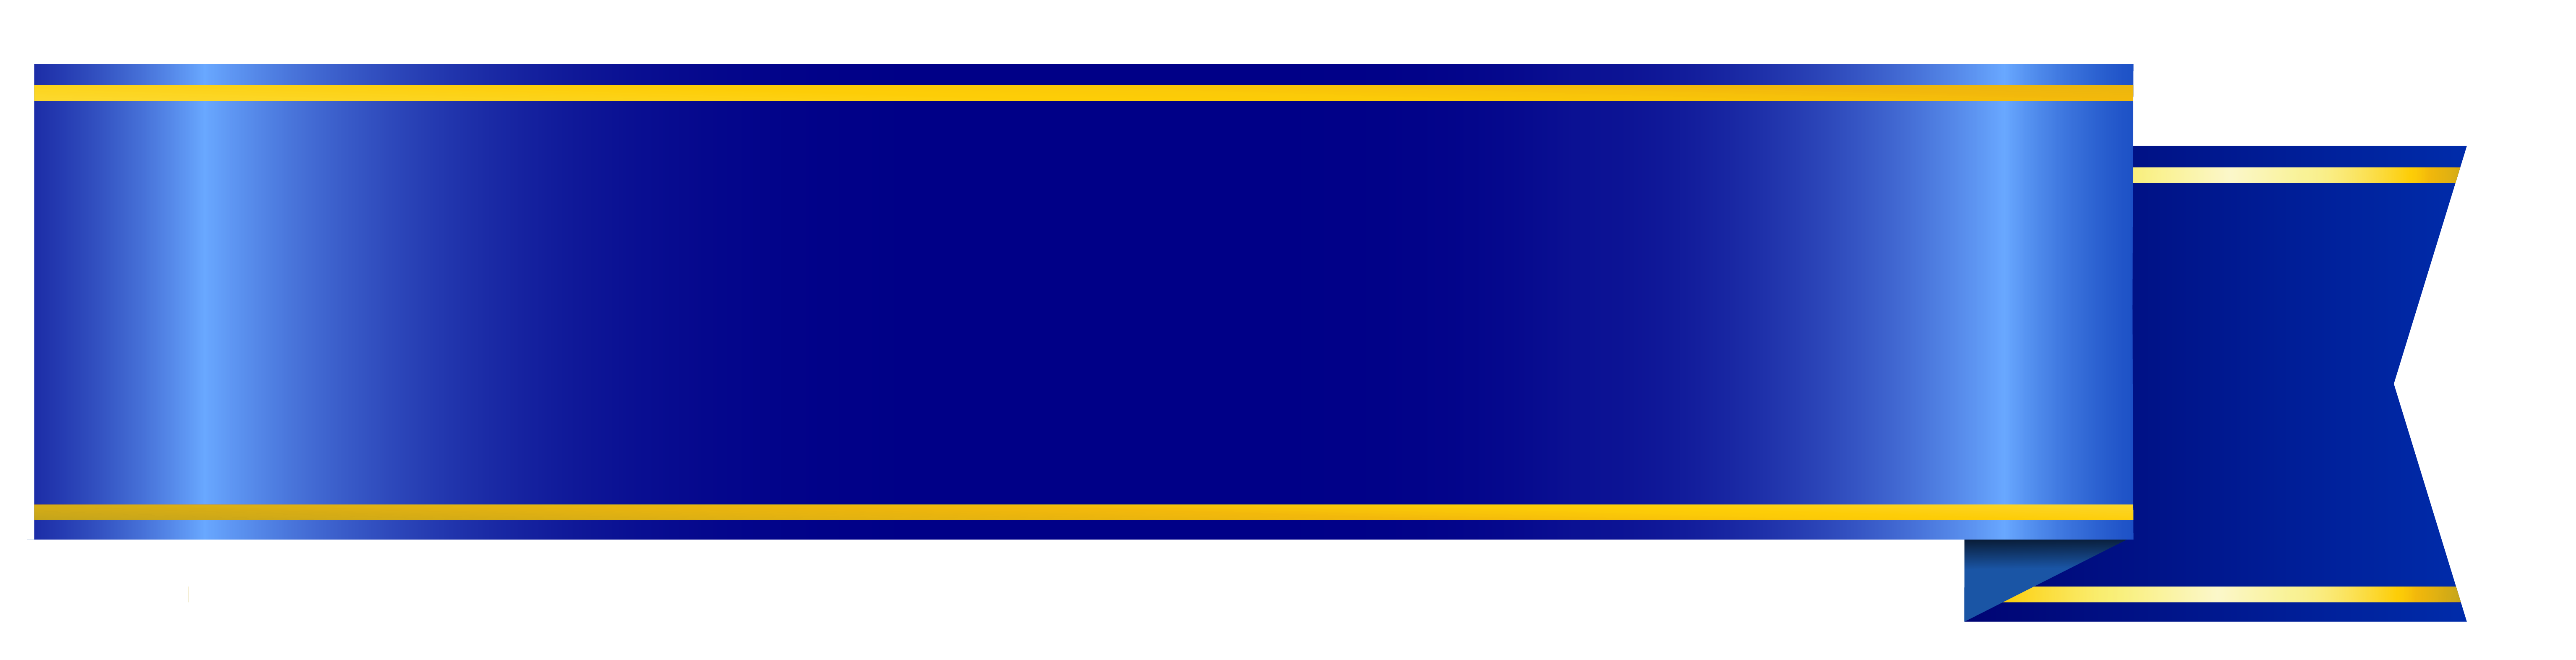 Banner azul imagem PNG transparente